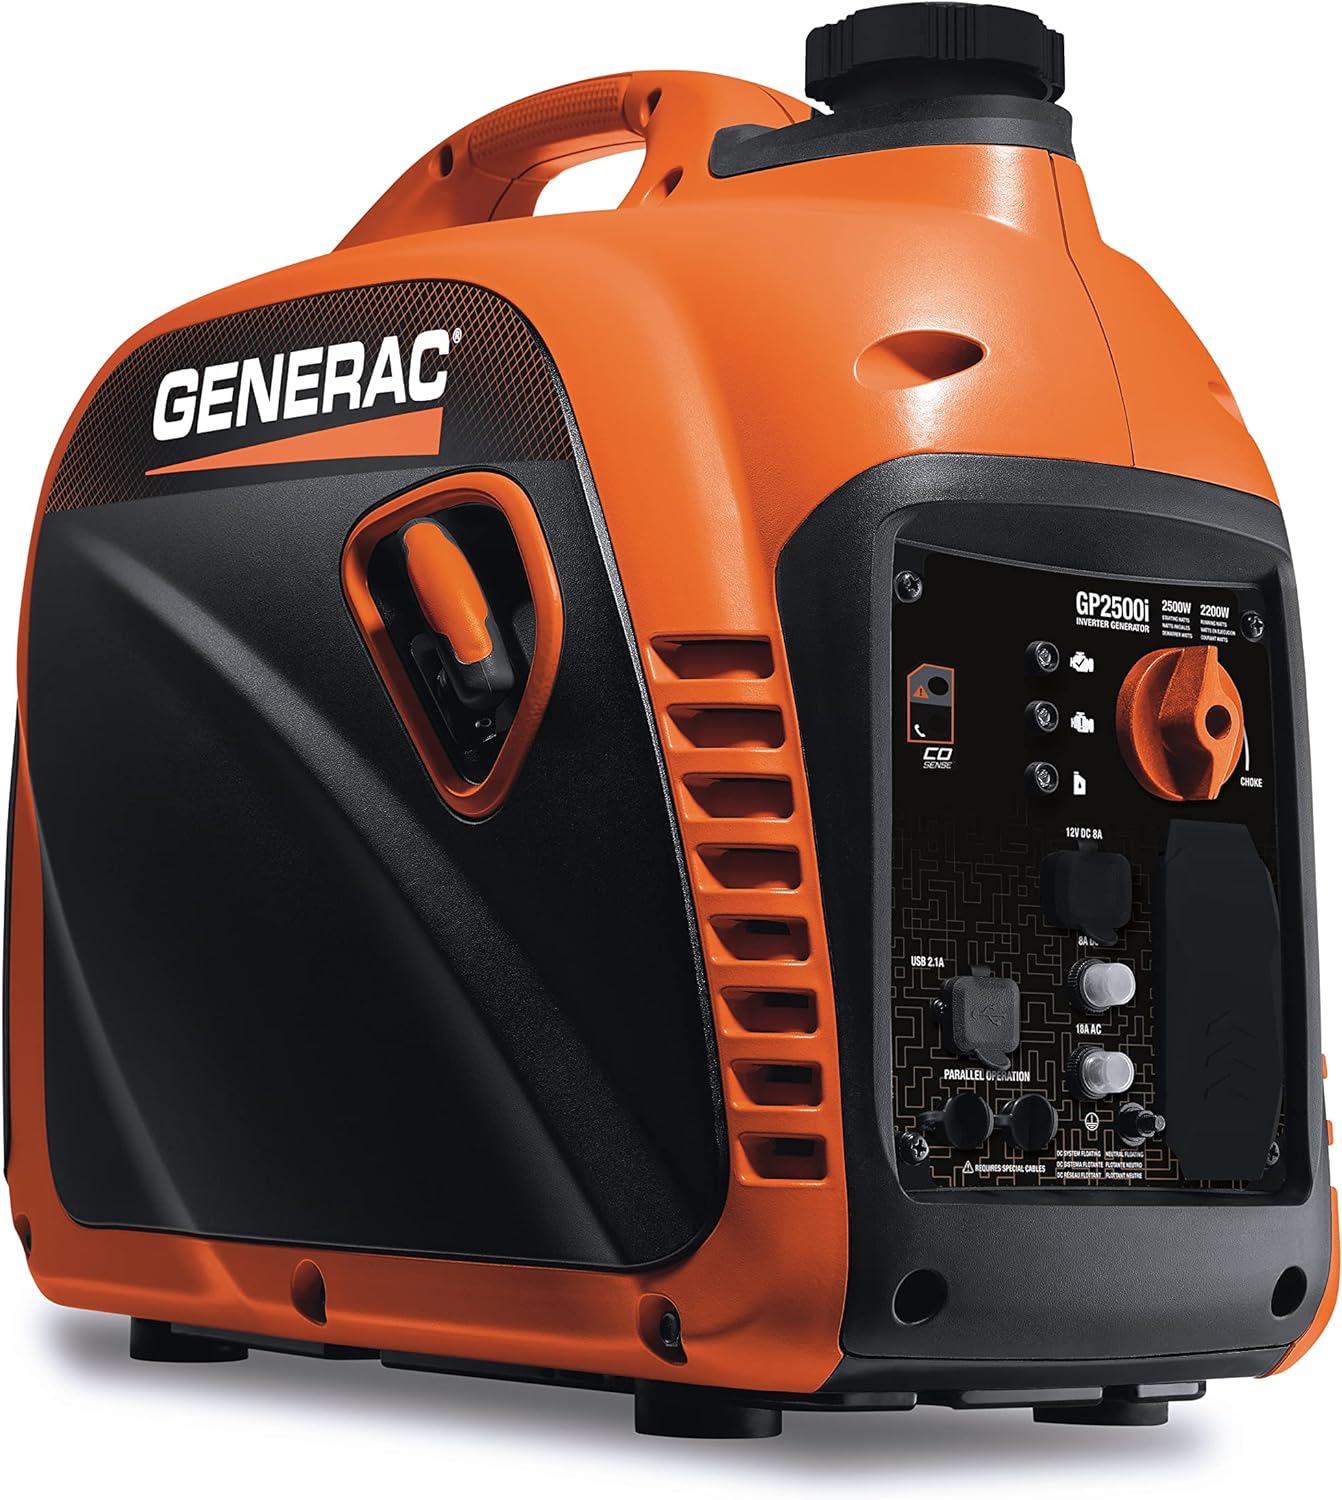 Generac 8251 GP2500i 2,500-Watt Gas-Powered Portable Generator CO Sense Technology